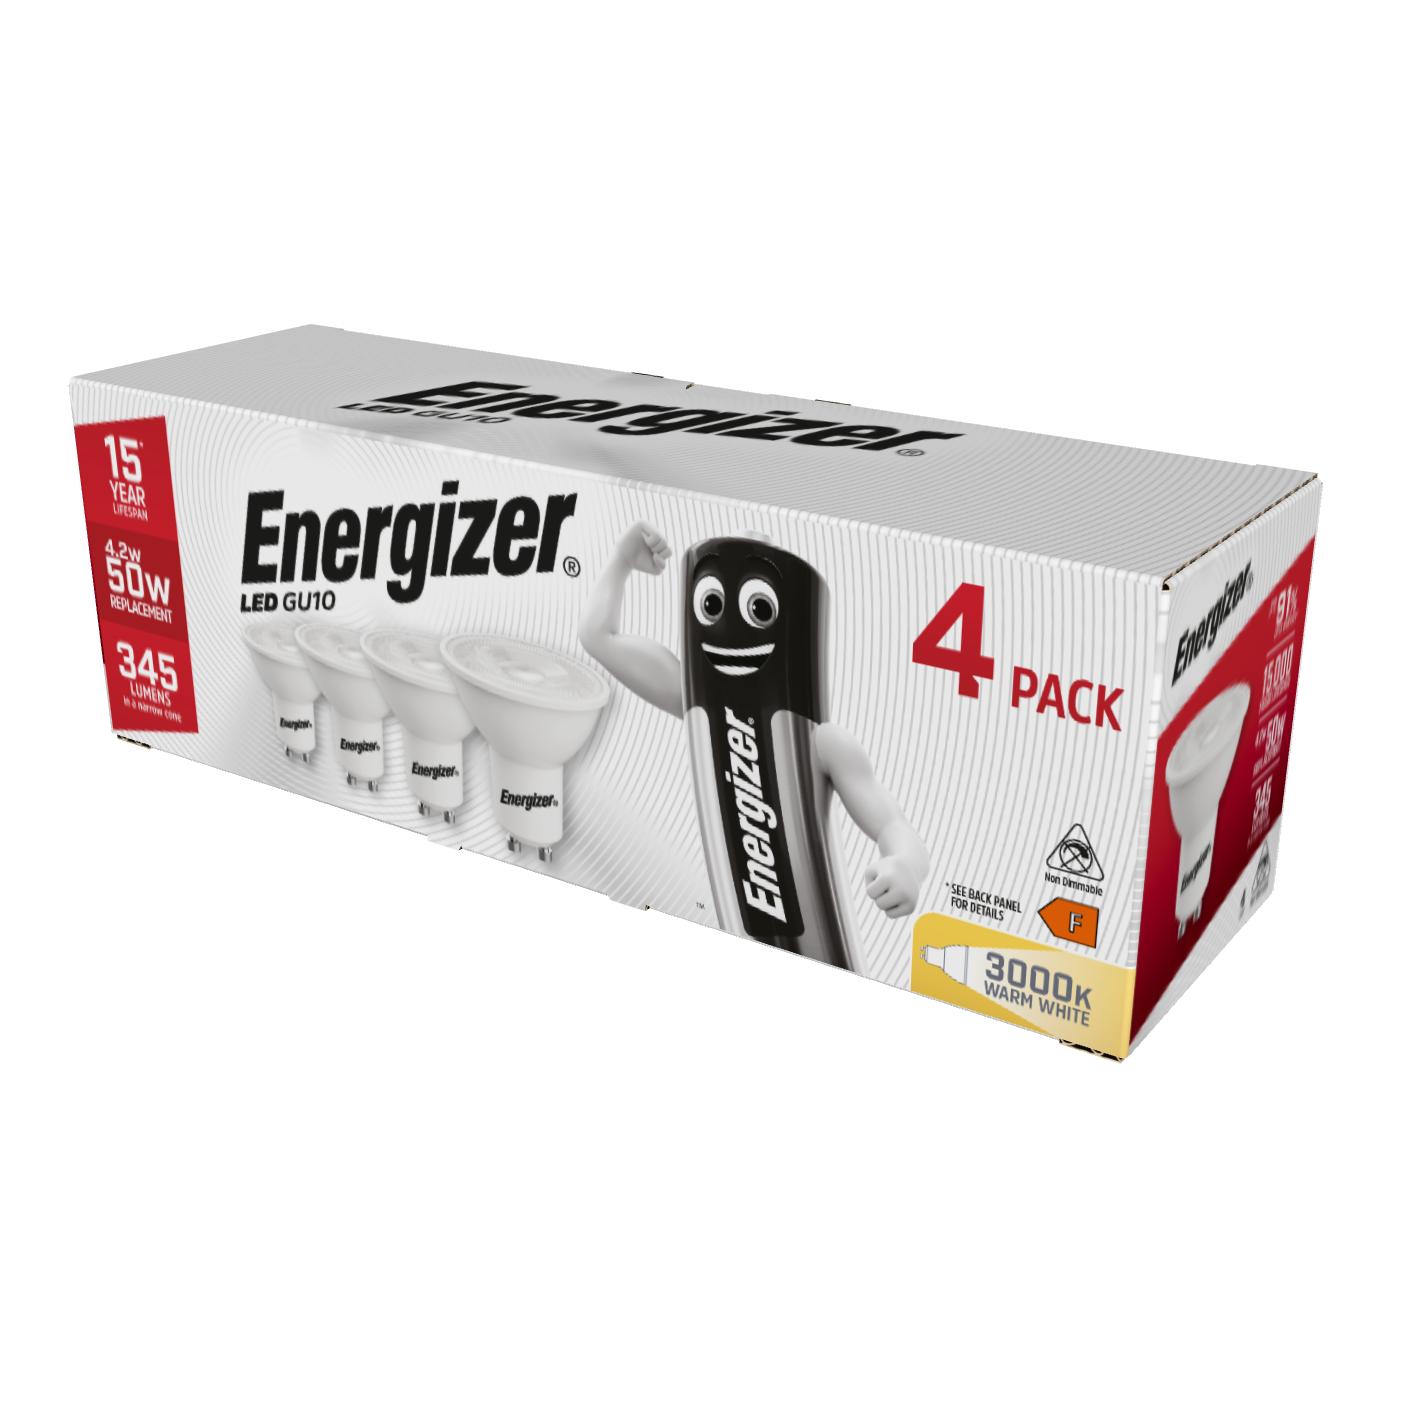 Energizer LED GU10 345 Lumens 4.2W 3,000K (Warm White), Box of 4